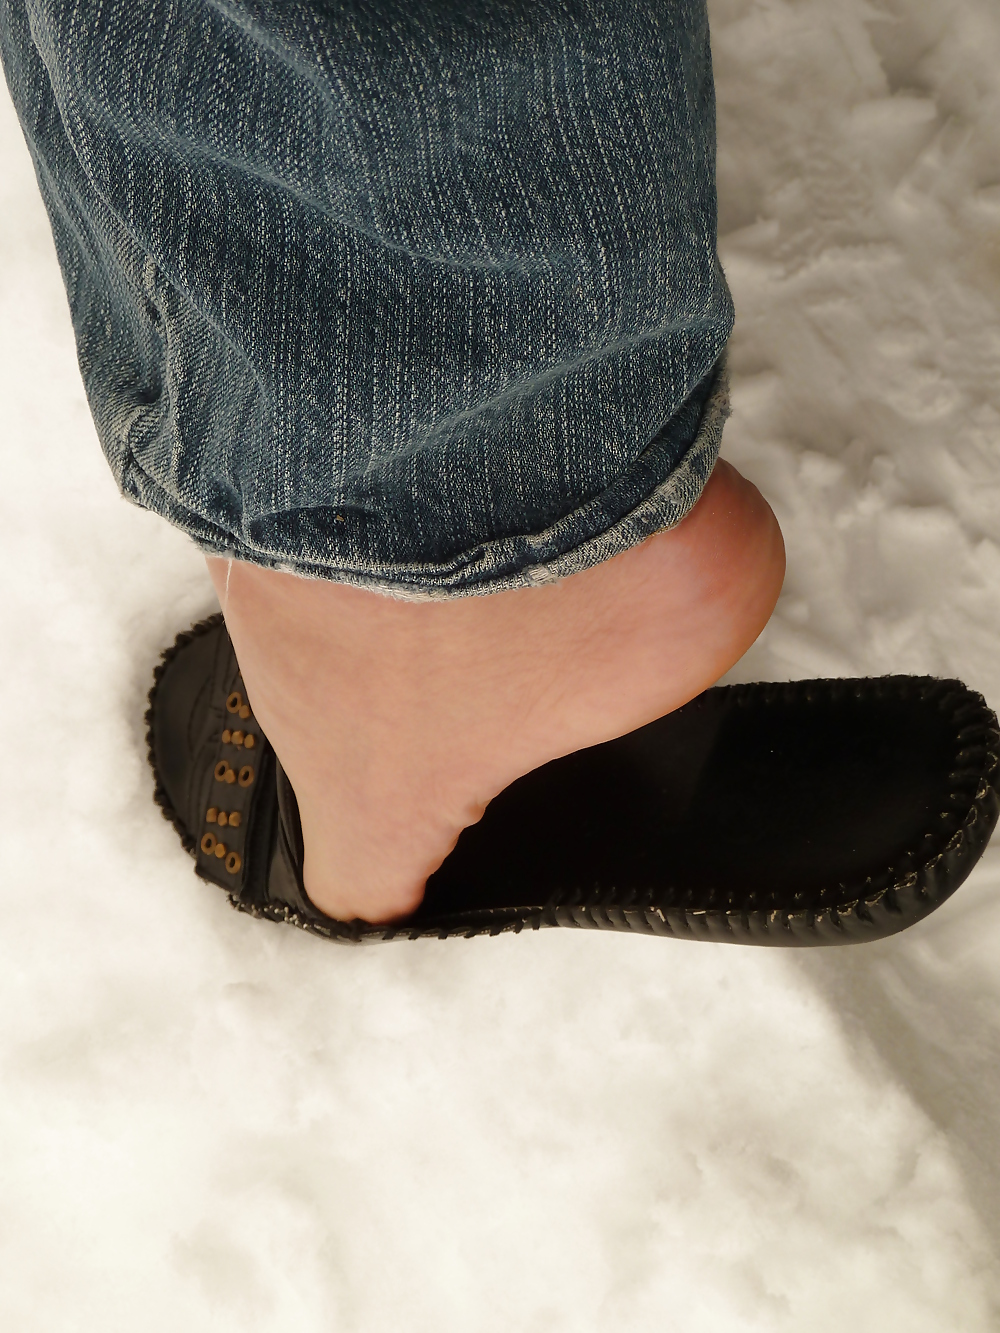 Feet in snow #8299004